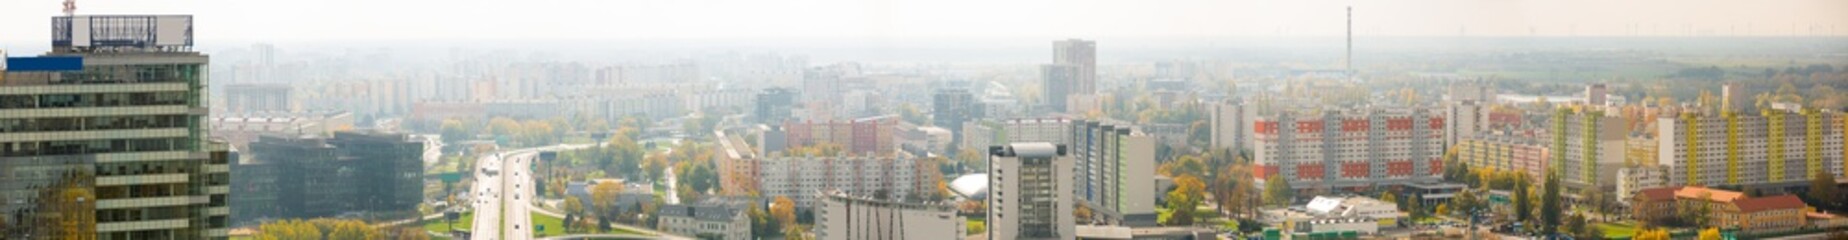 Panoramic view of Bratislava with modern apartment buildings